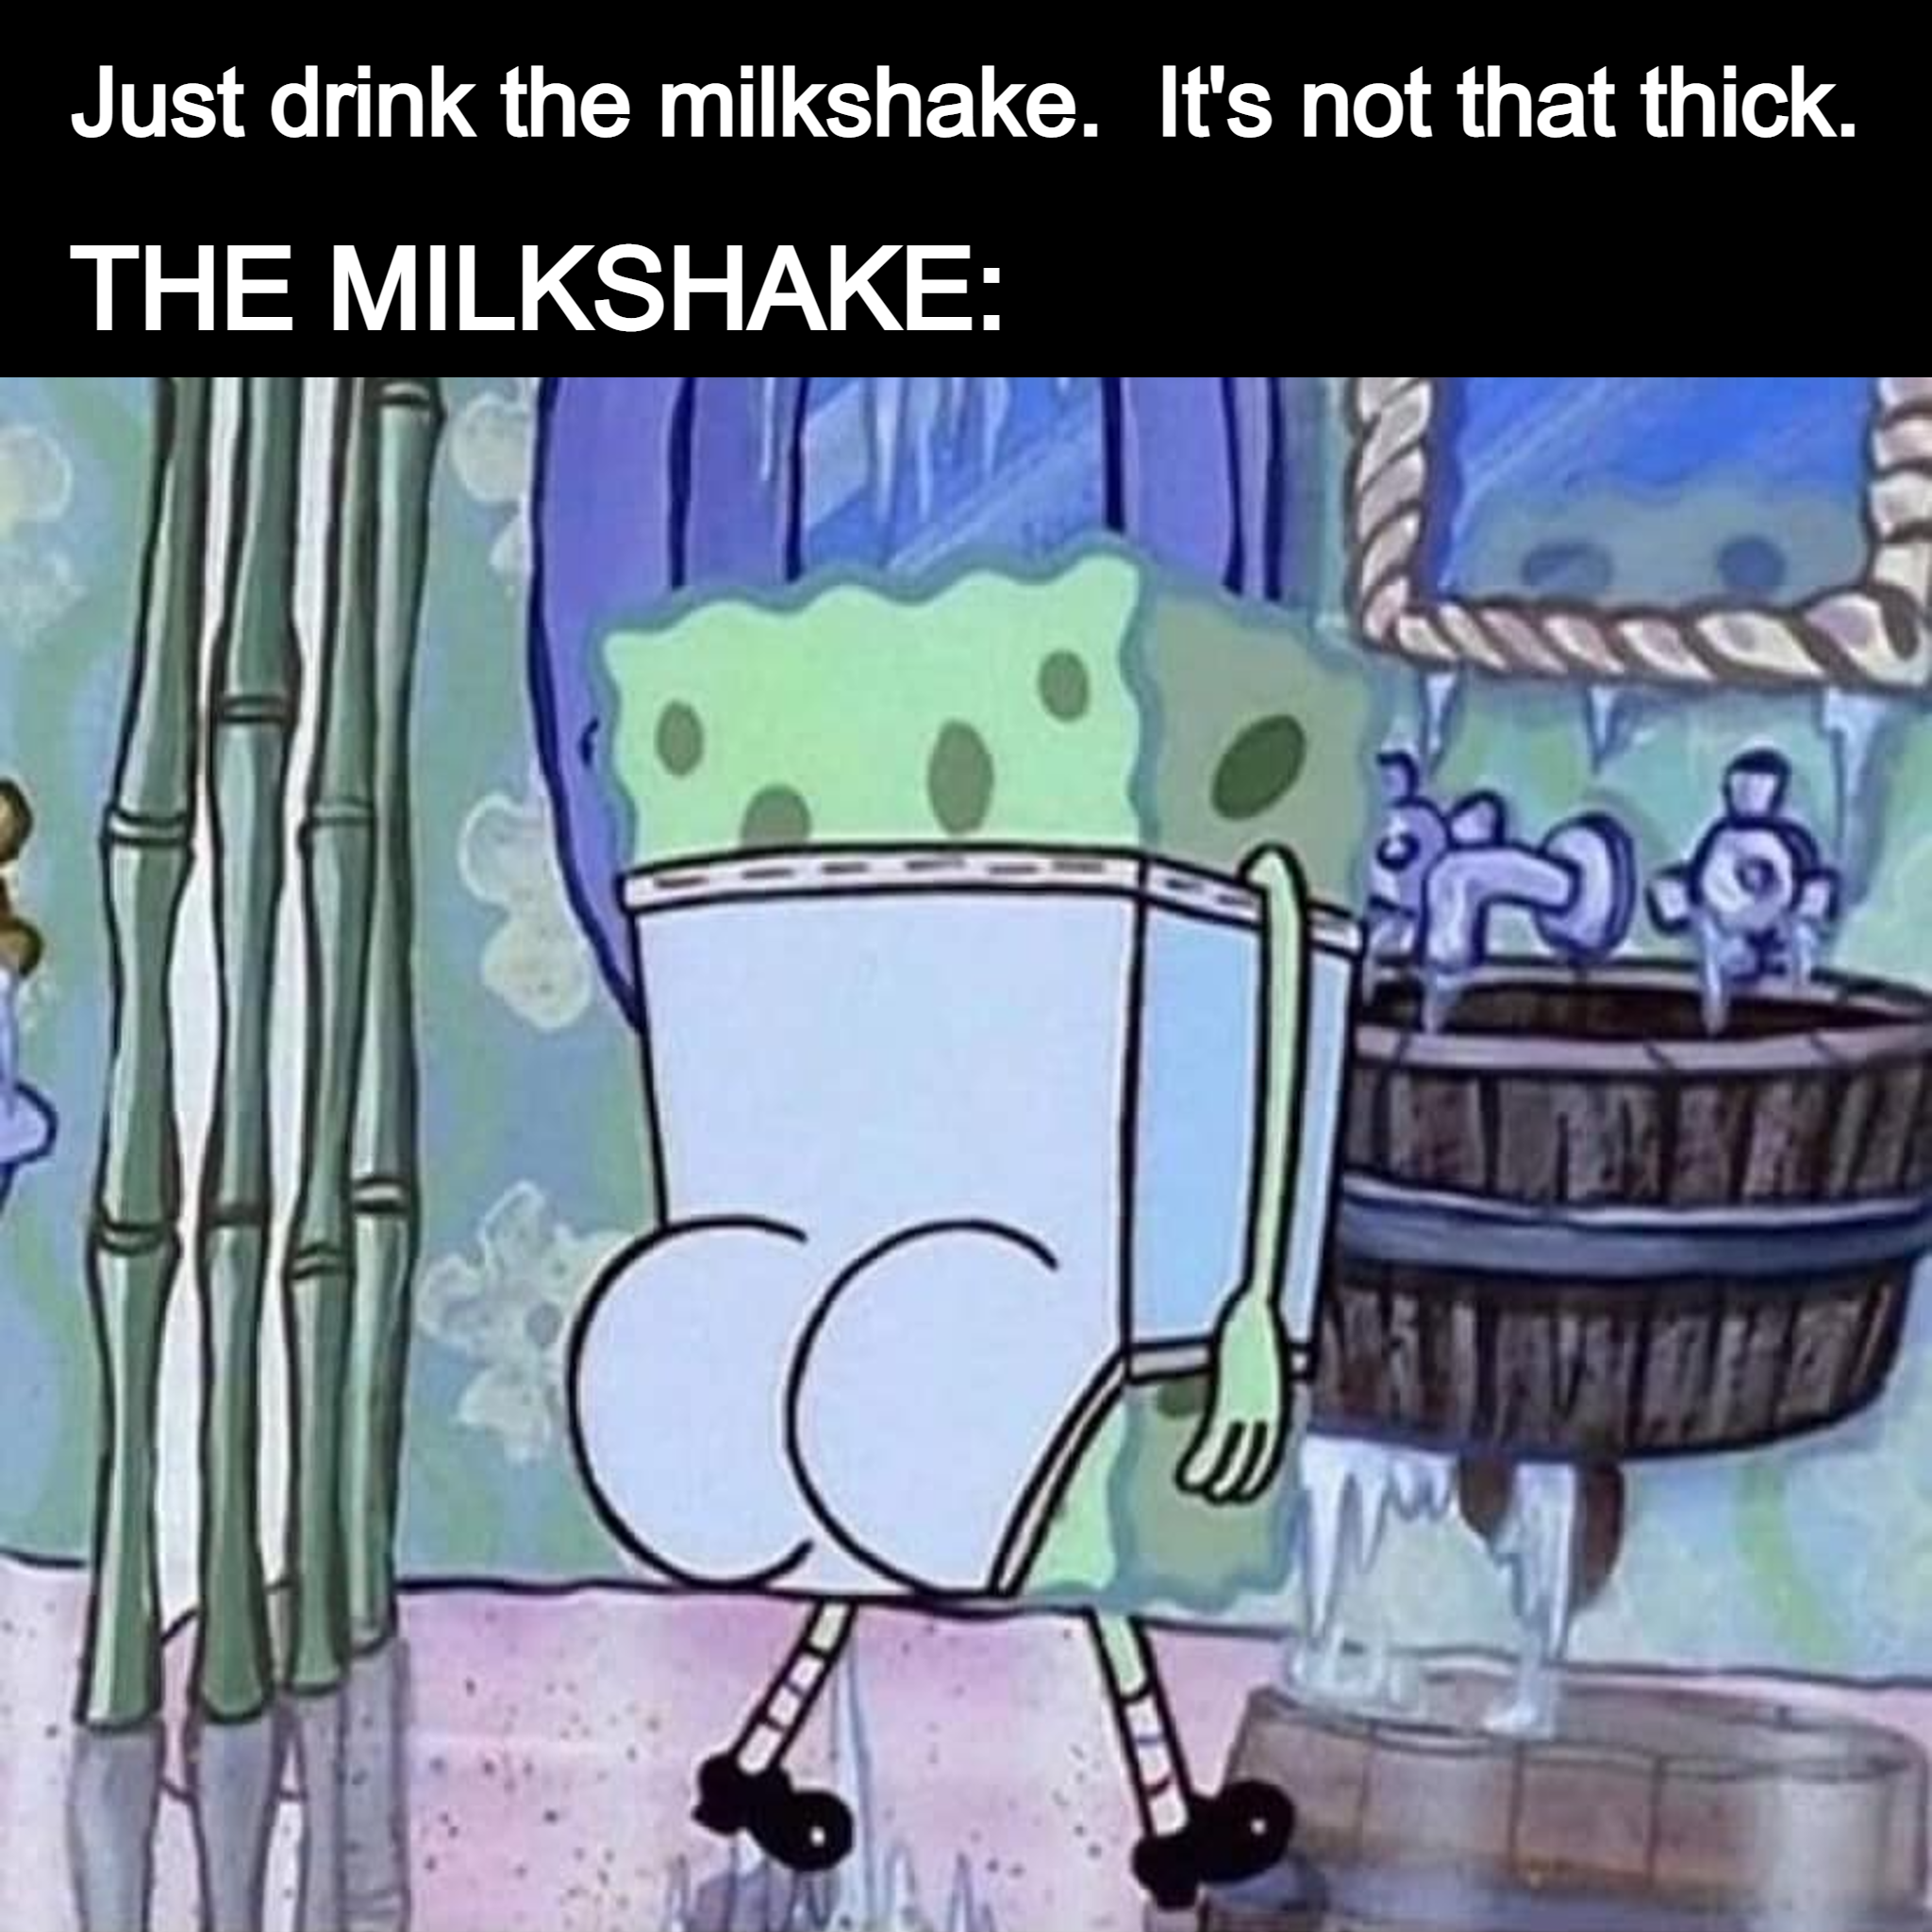 The milkshake.